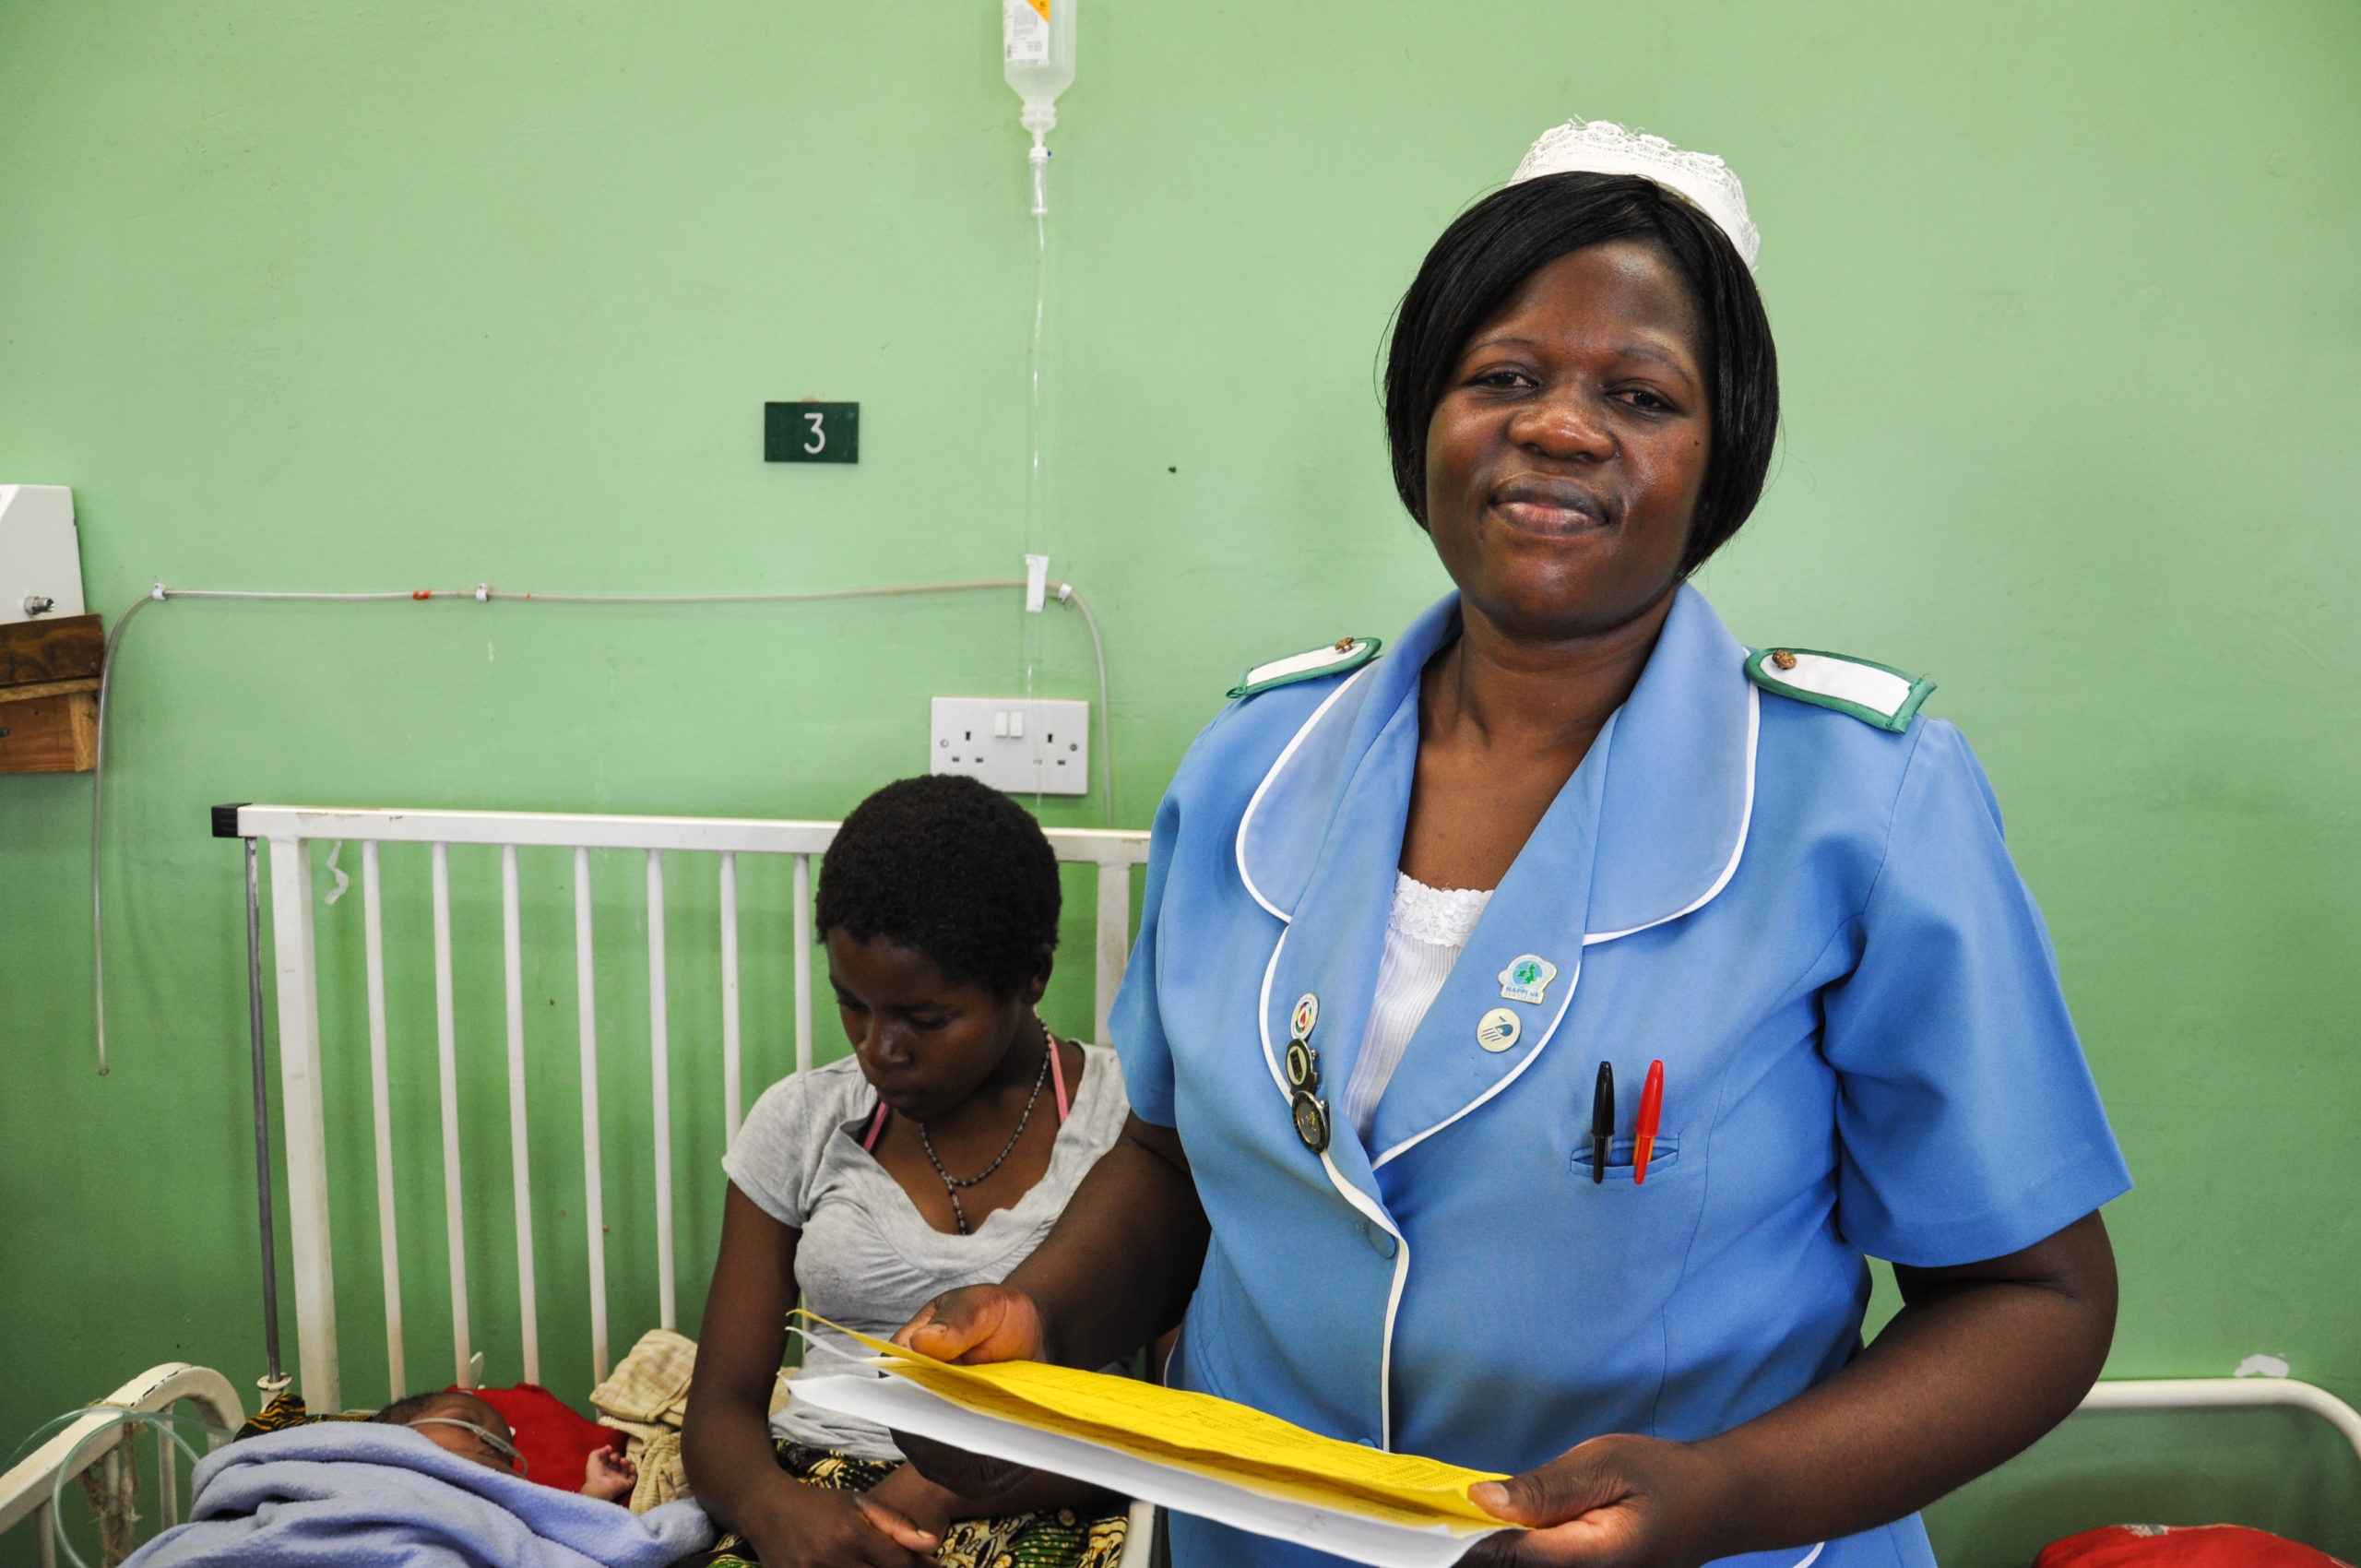 Malawian maternity ward nurse